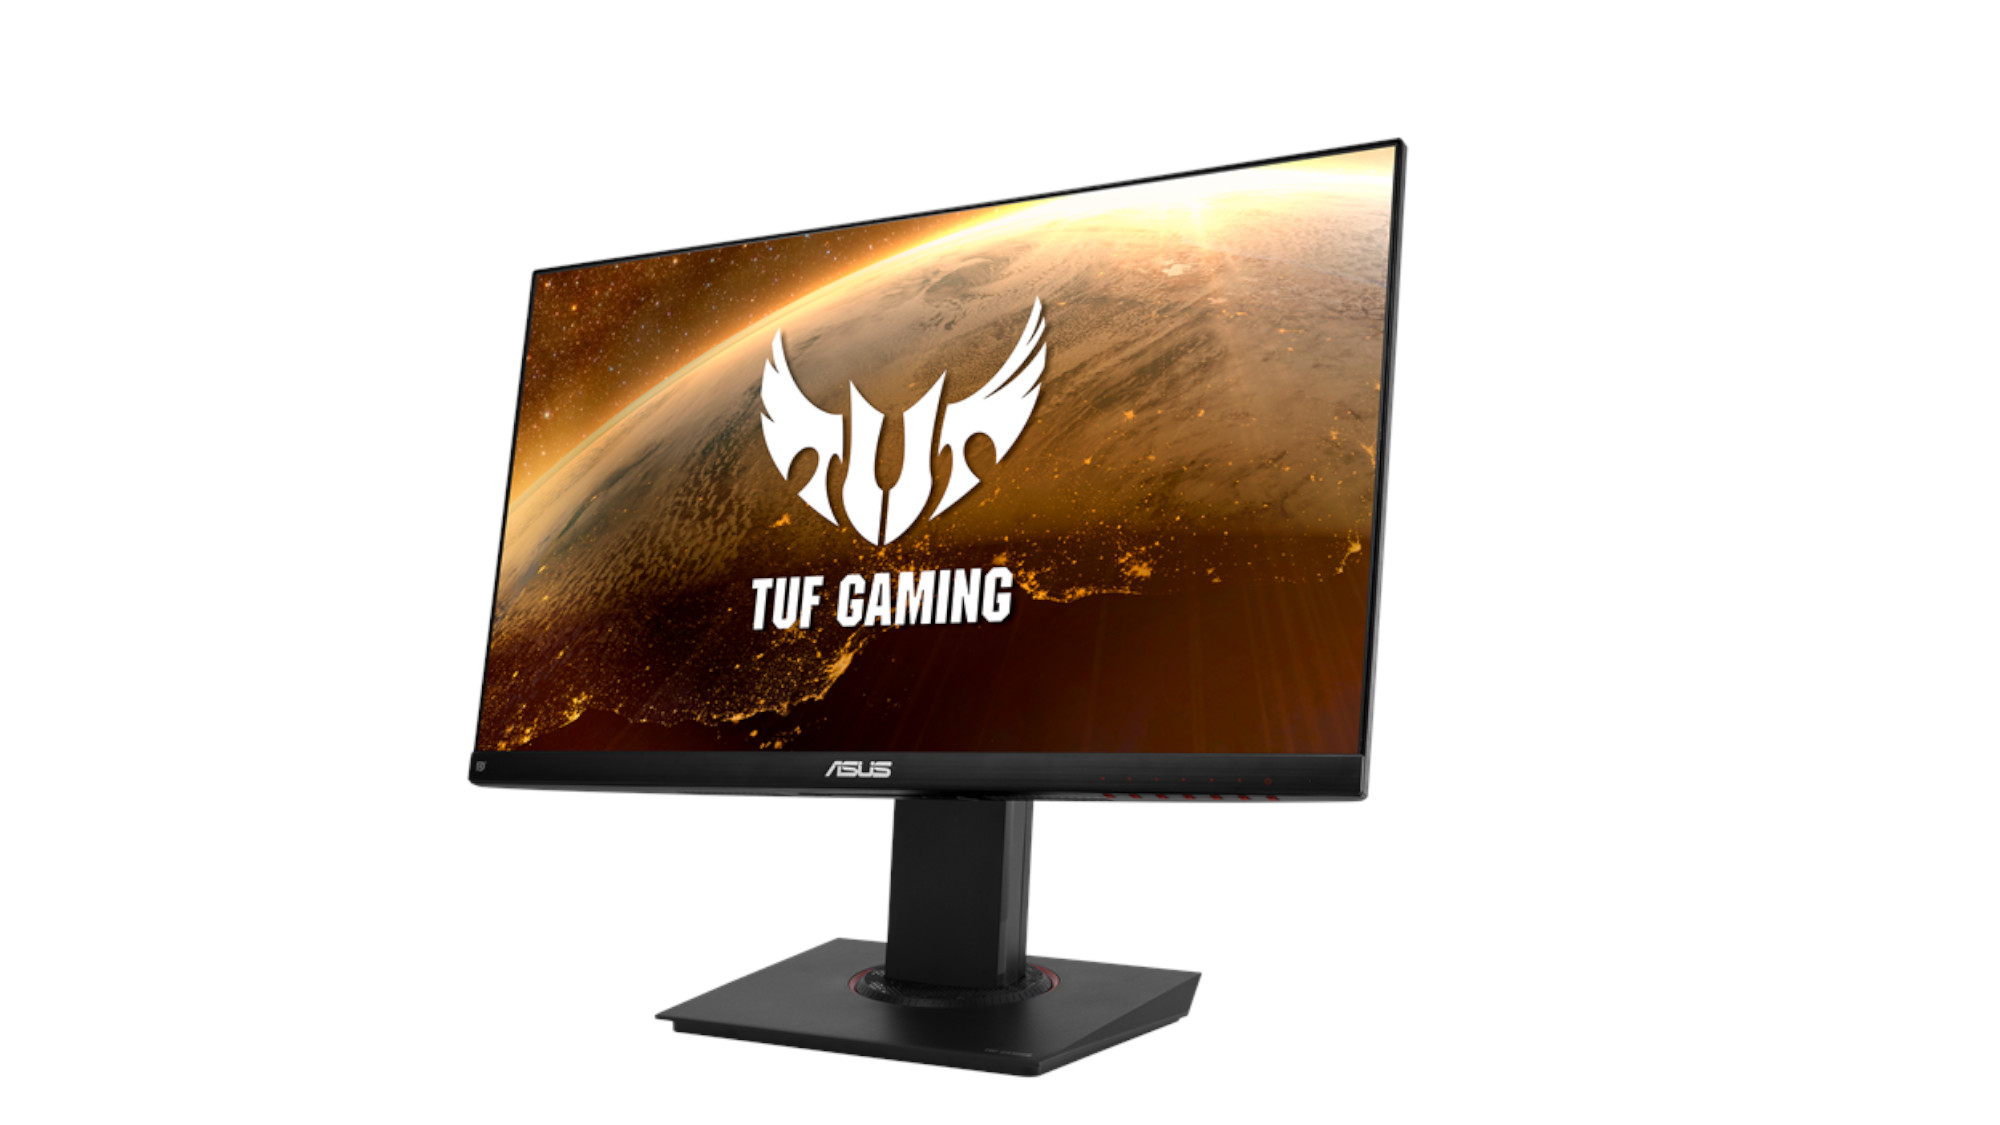 Asus TUF Gaming VG289Q monitor on white background